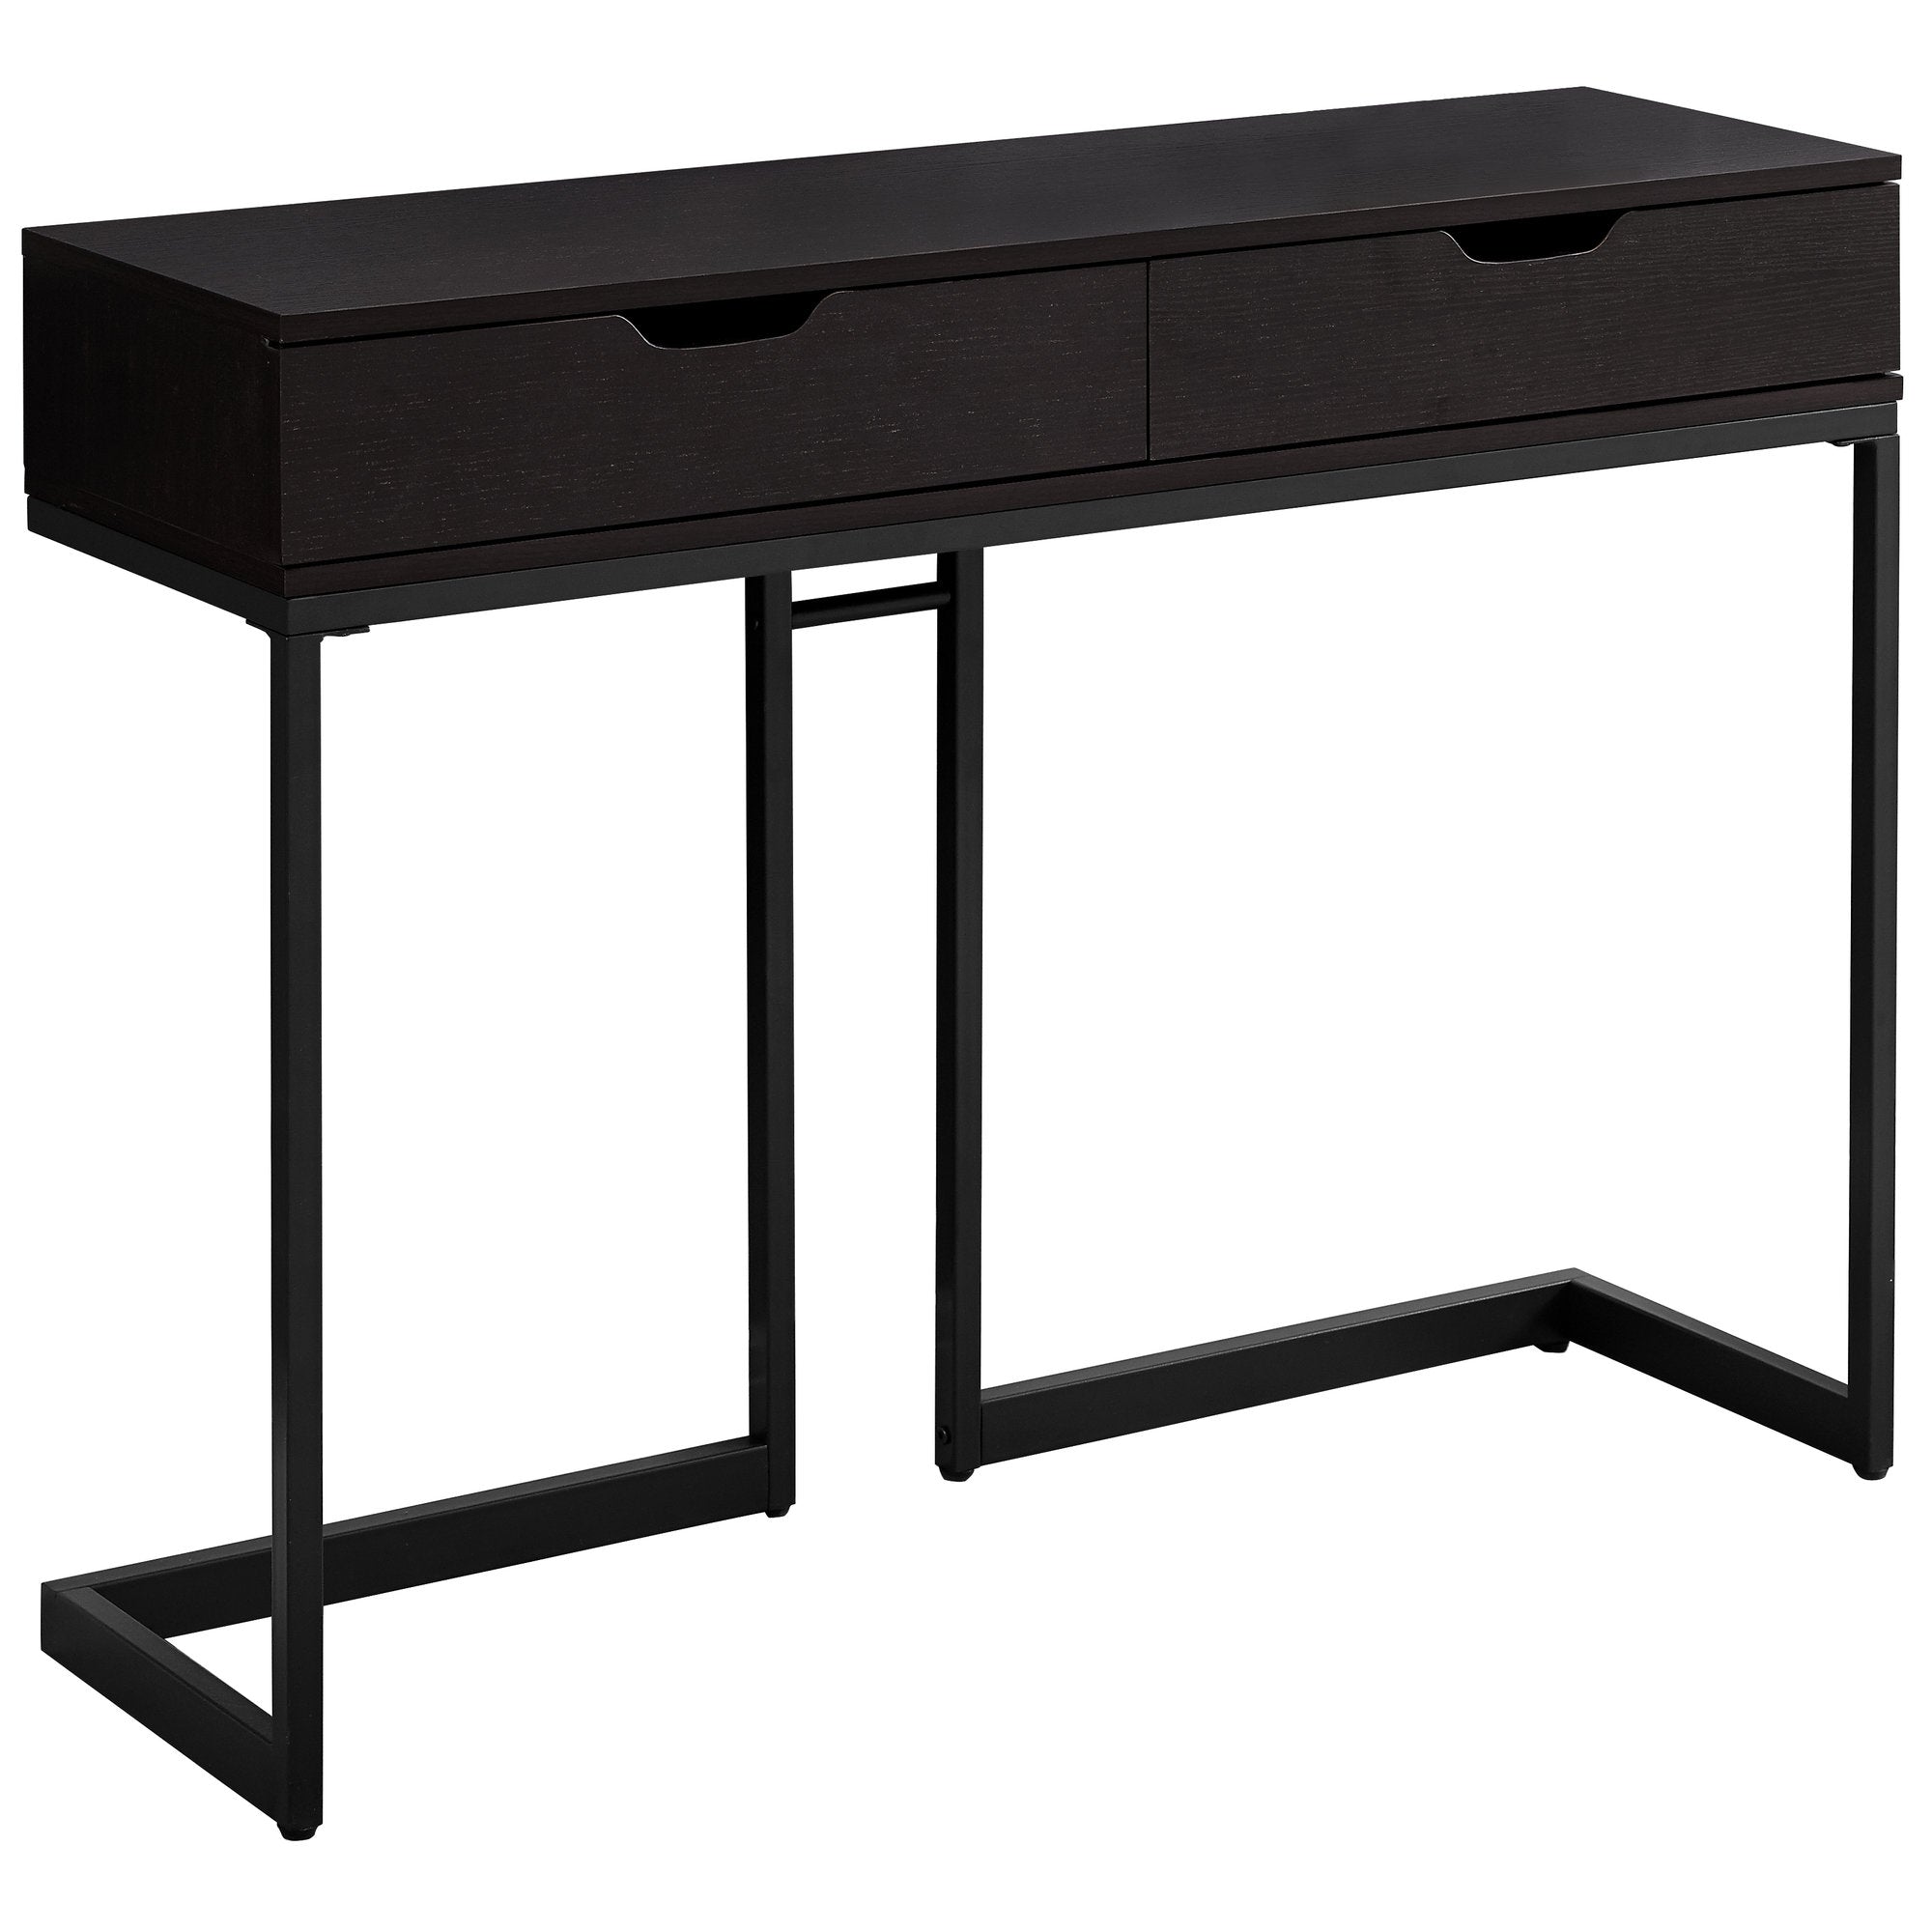 MN-183517    Accent Table, Console, Entryway, Narrow, Sofa, Living Room, Bedroom, Metal Legs, Laminate, Dark Brown, Black, Contemporary, Modern